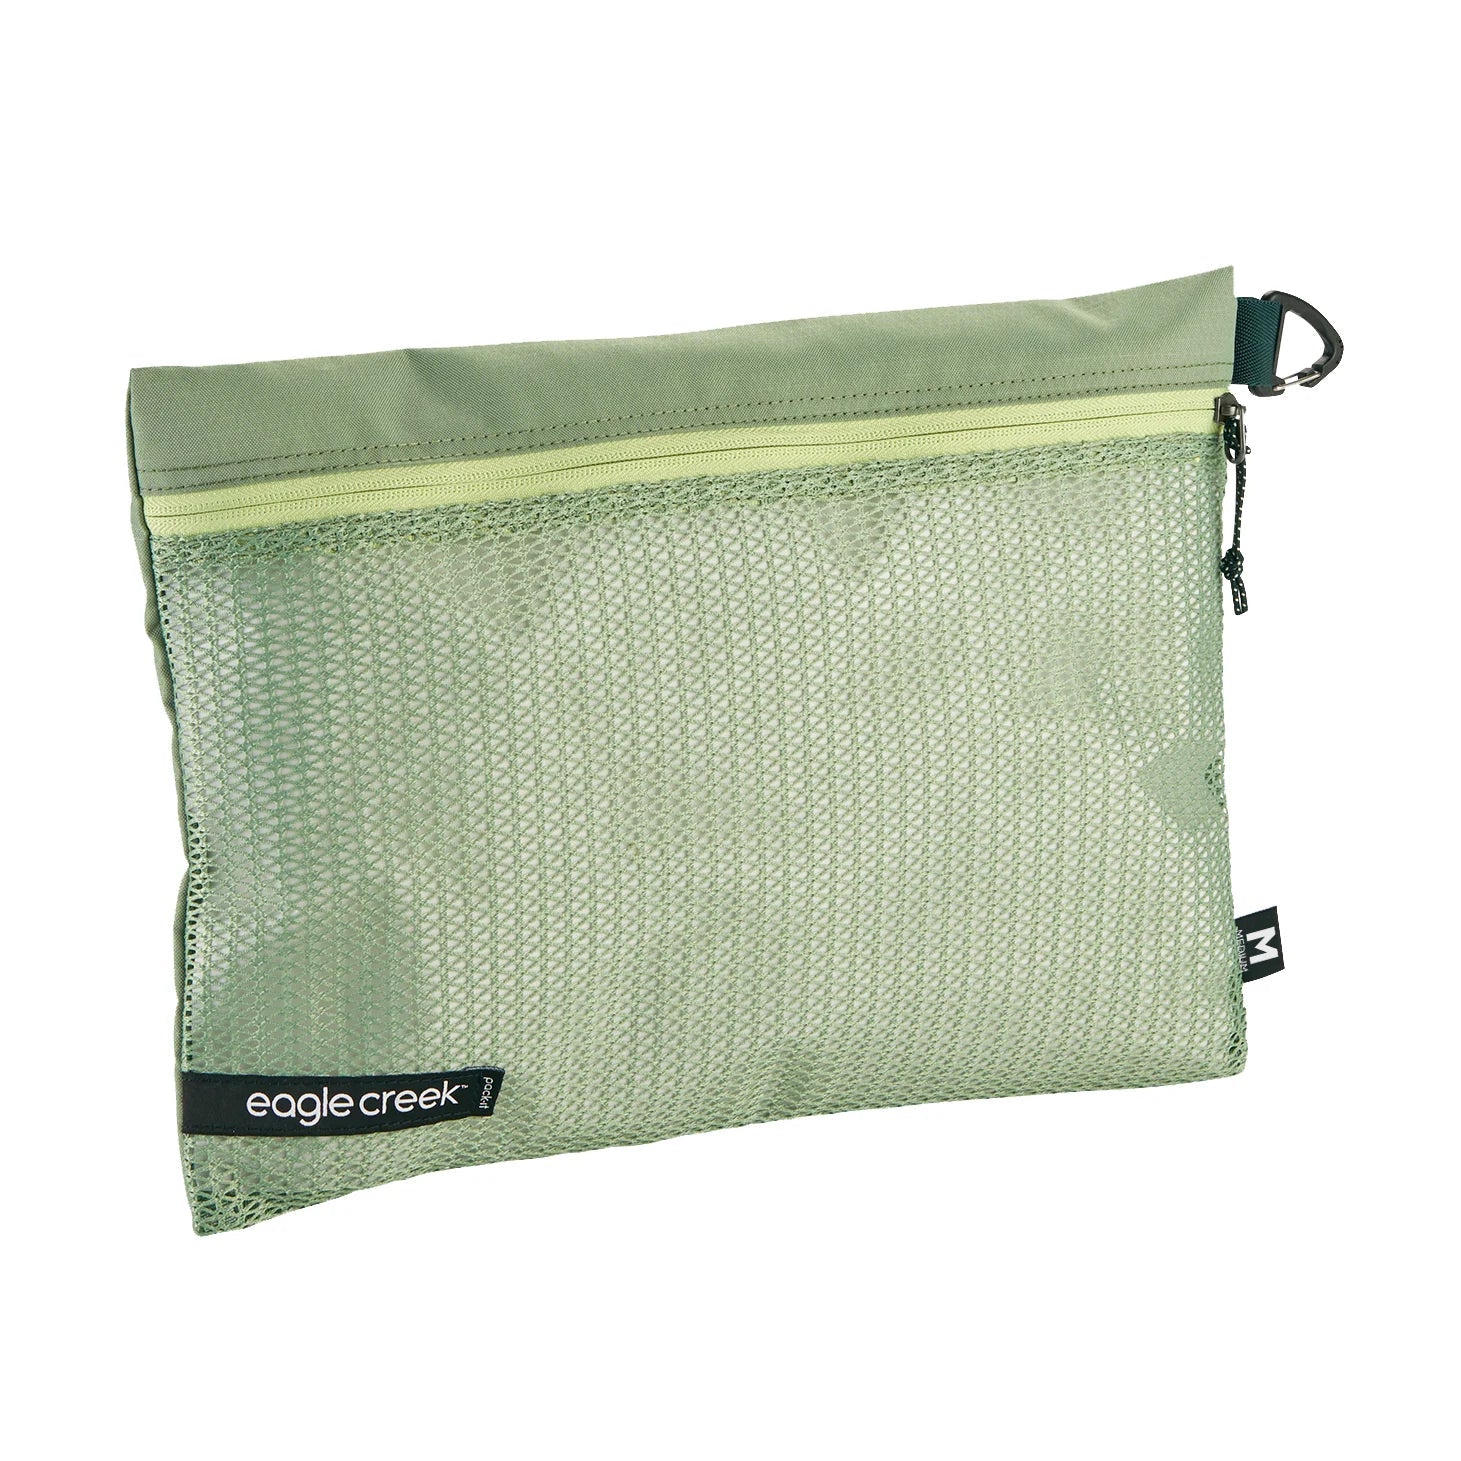 Eagle Creek Pack-It Reveal Sac M 36 cm - mossy green